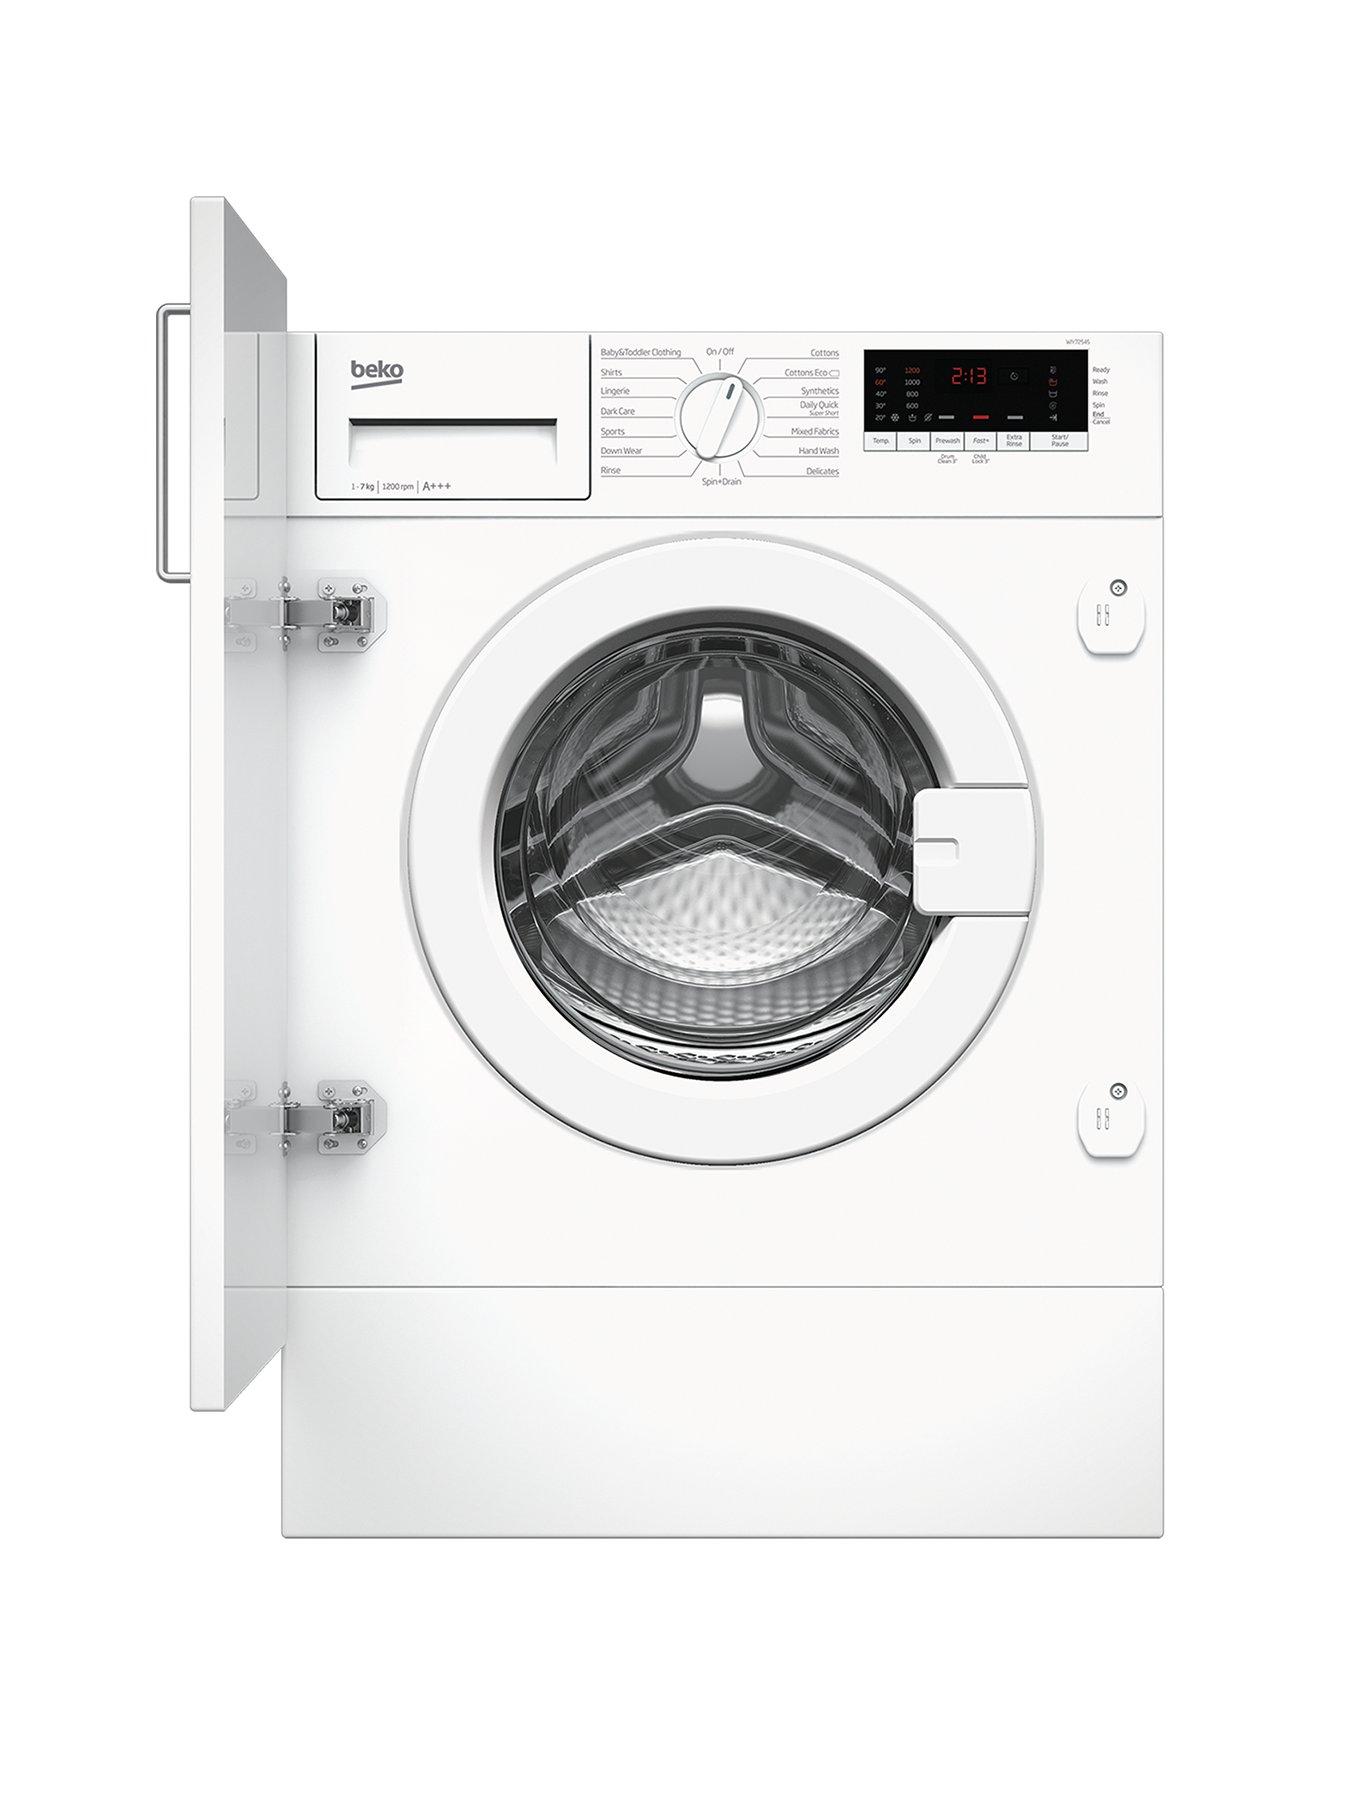 Beko Wiy72545 7Kg Load, 1200 Spin Built-In Washing Machine – White – Washing Machine With Installation